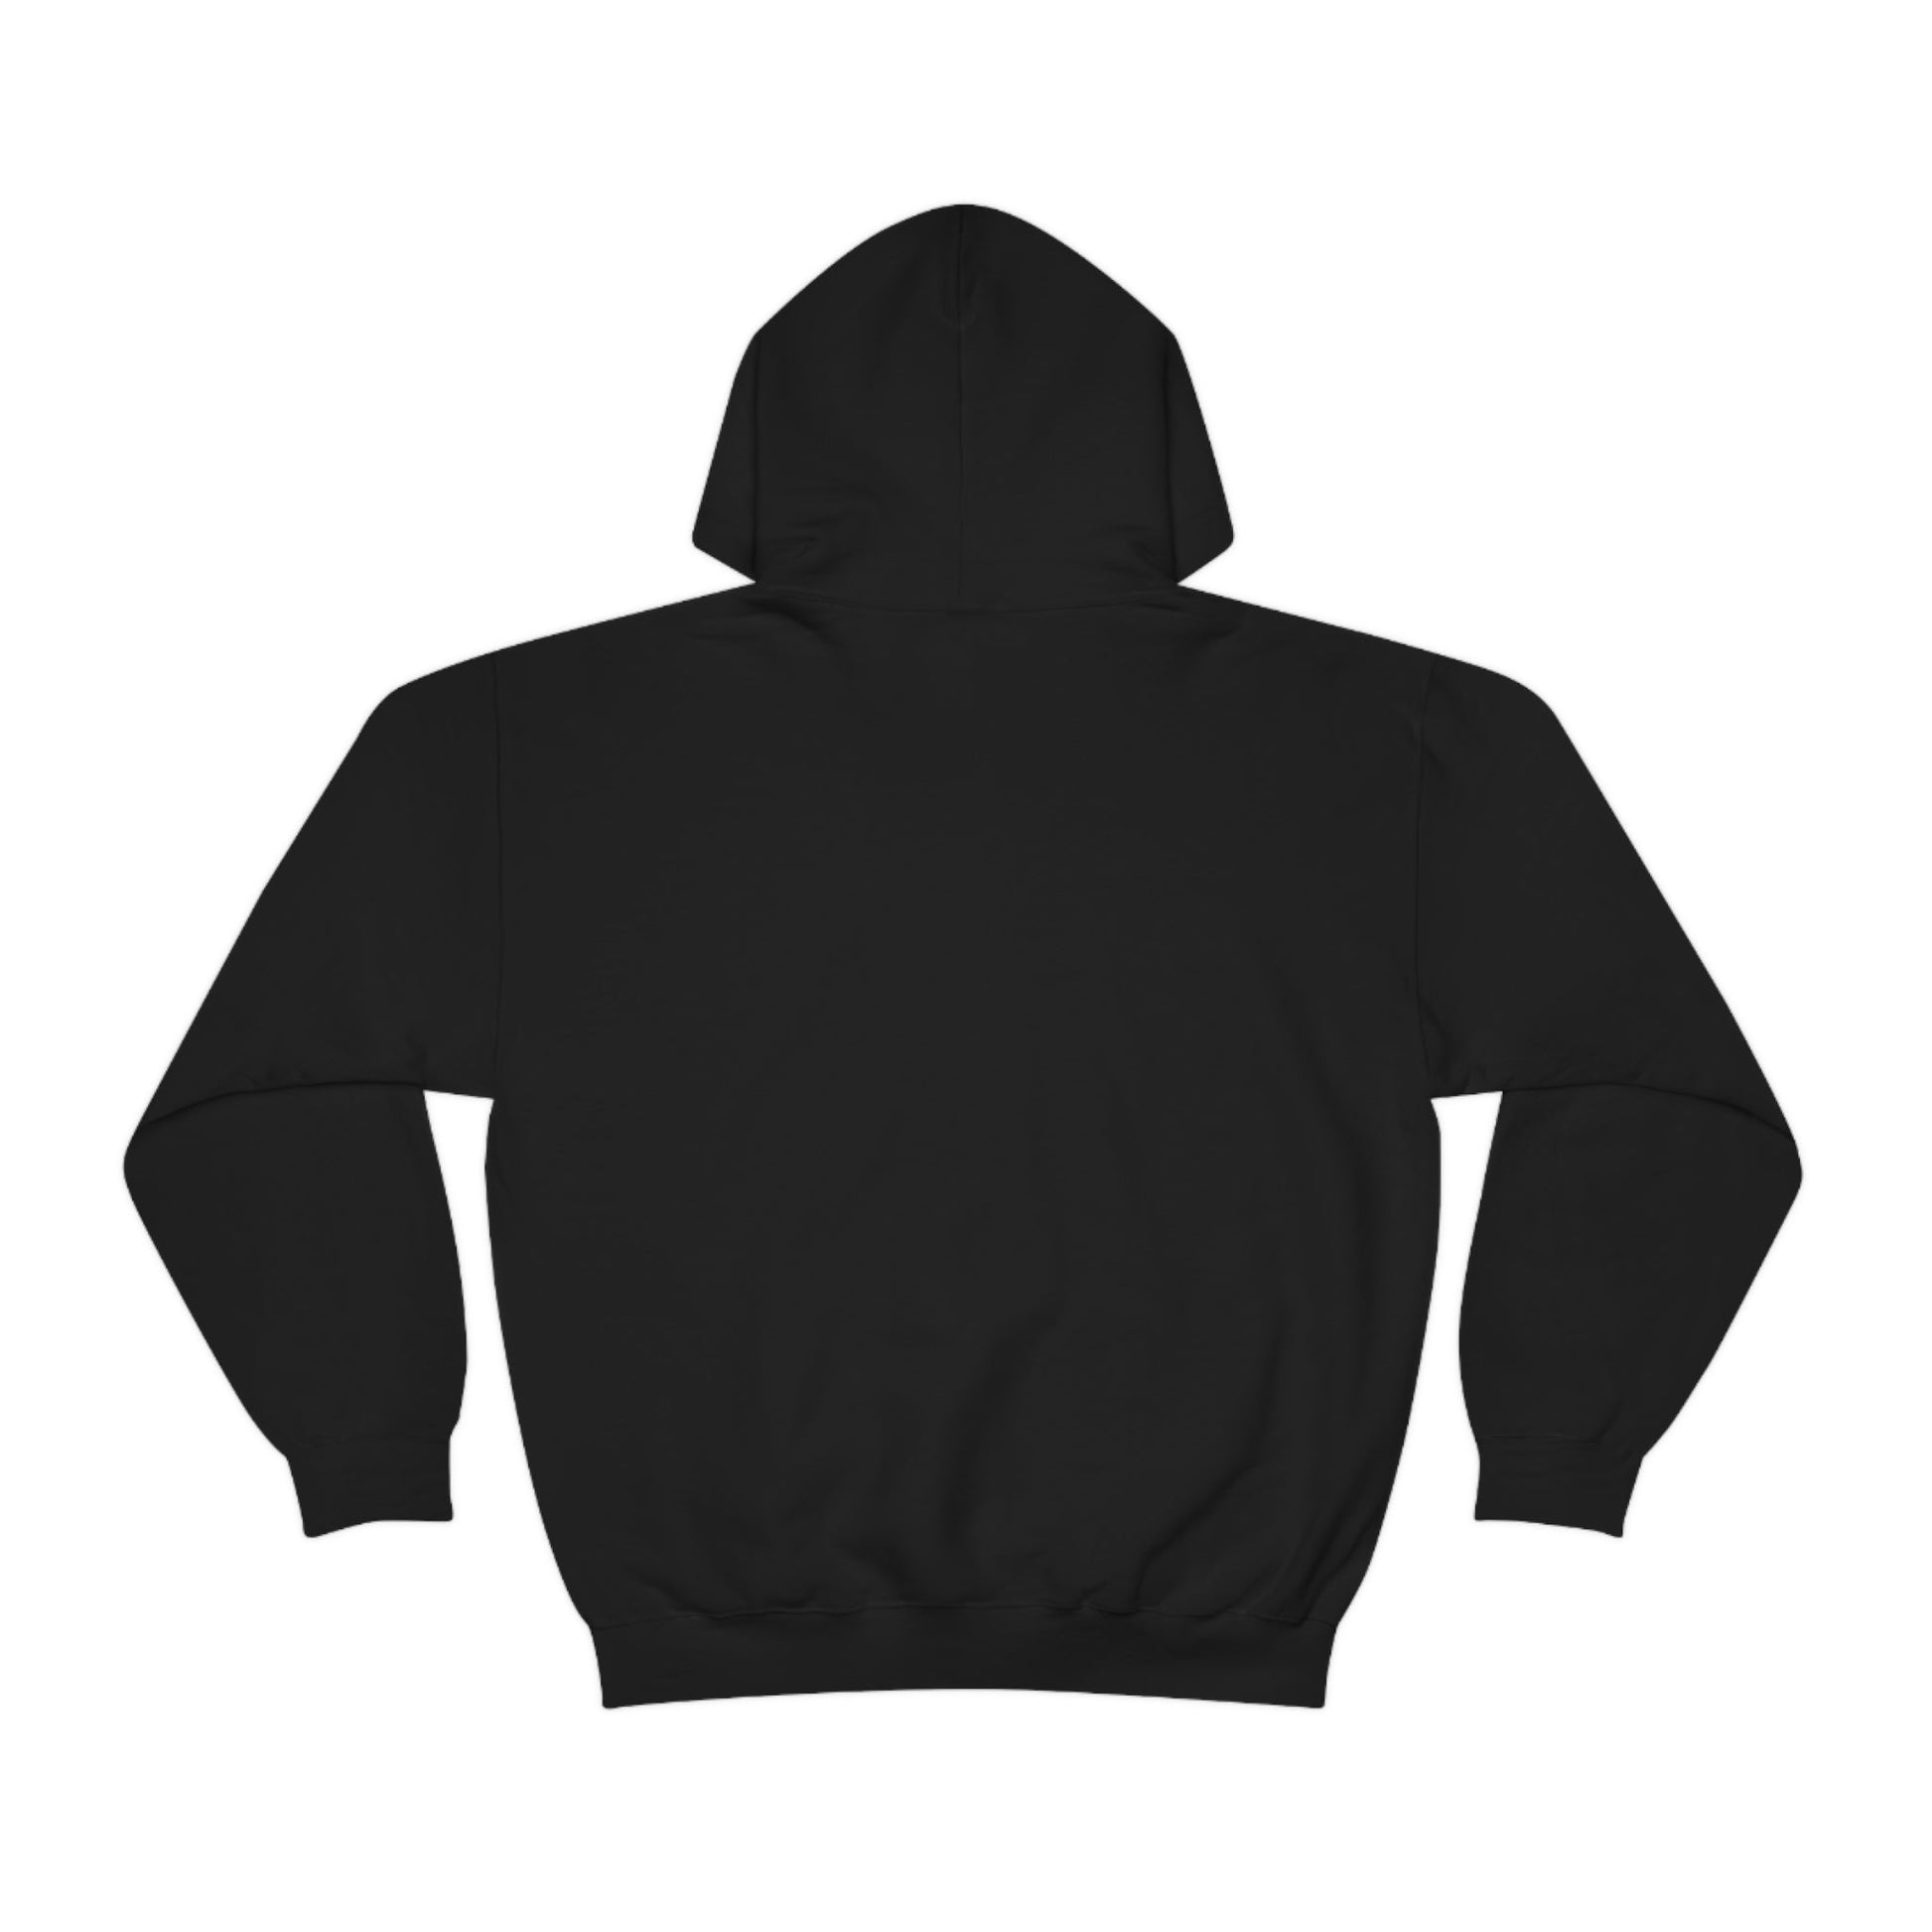 Pet Dad | Hooded Sweatshirt - Detezi Designs-25207472051066758043